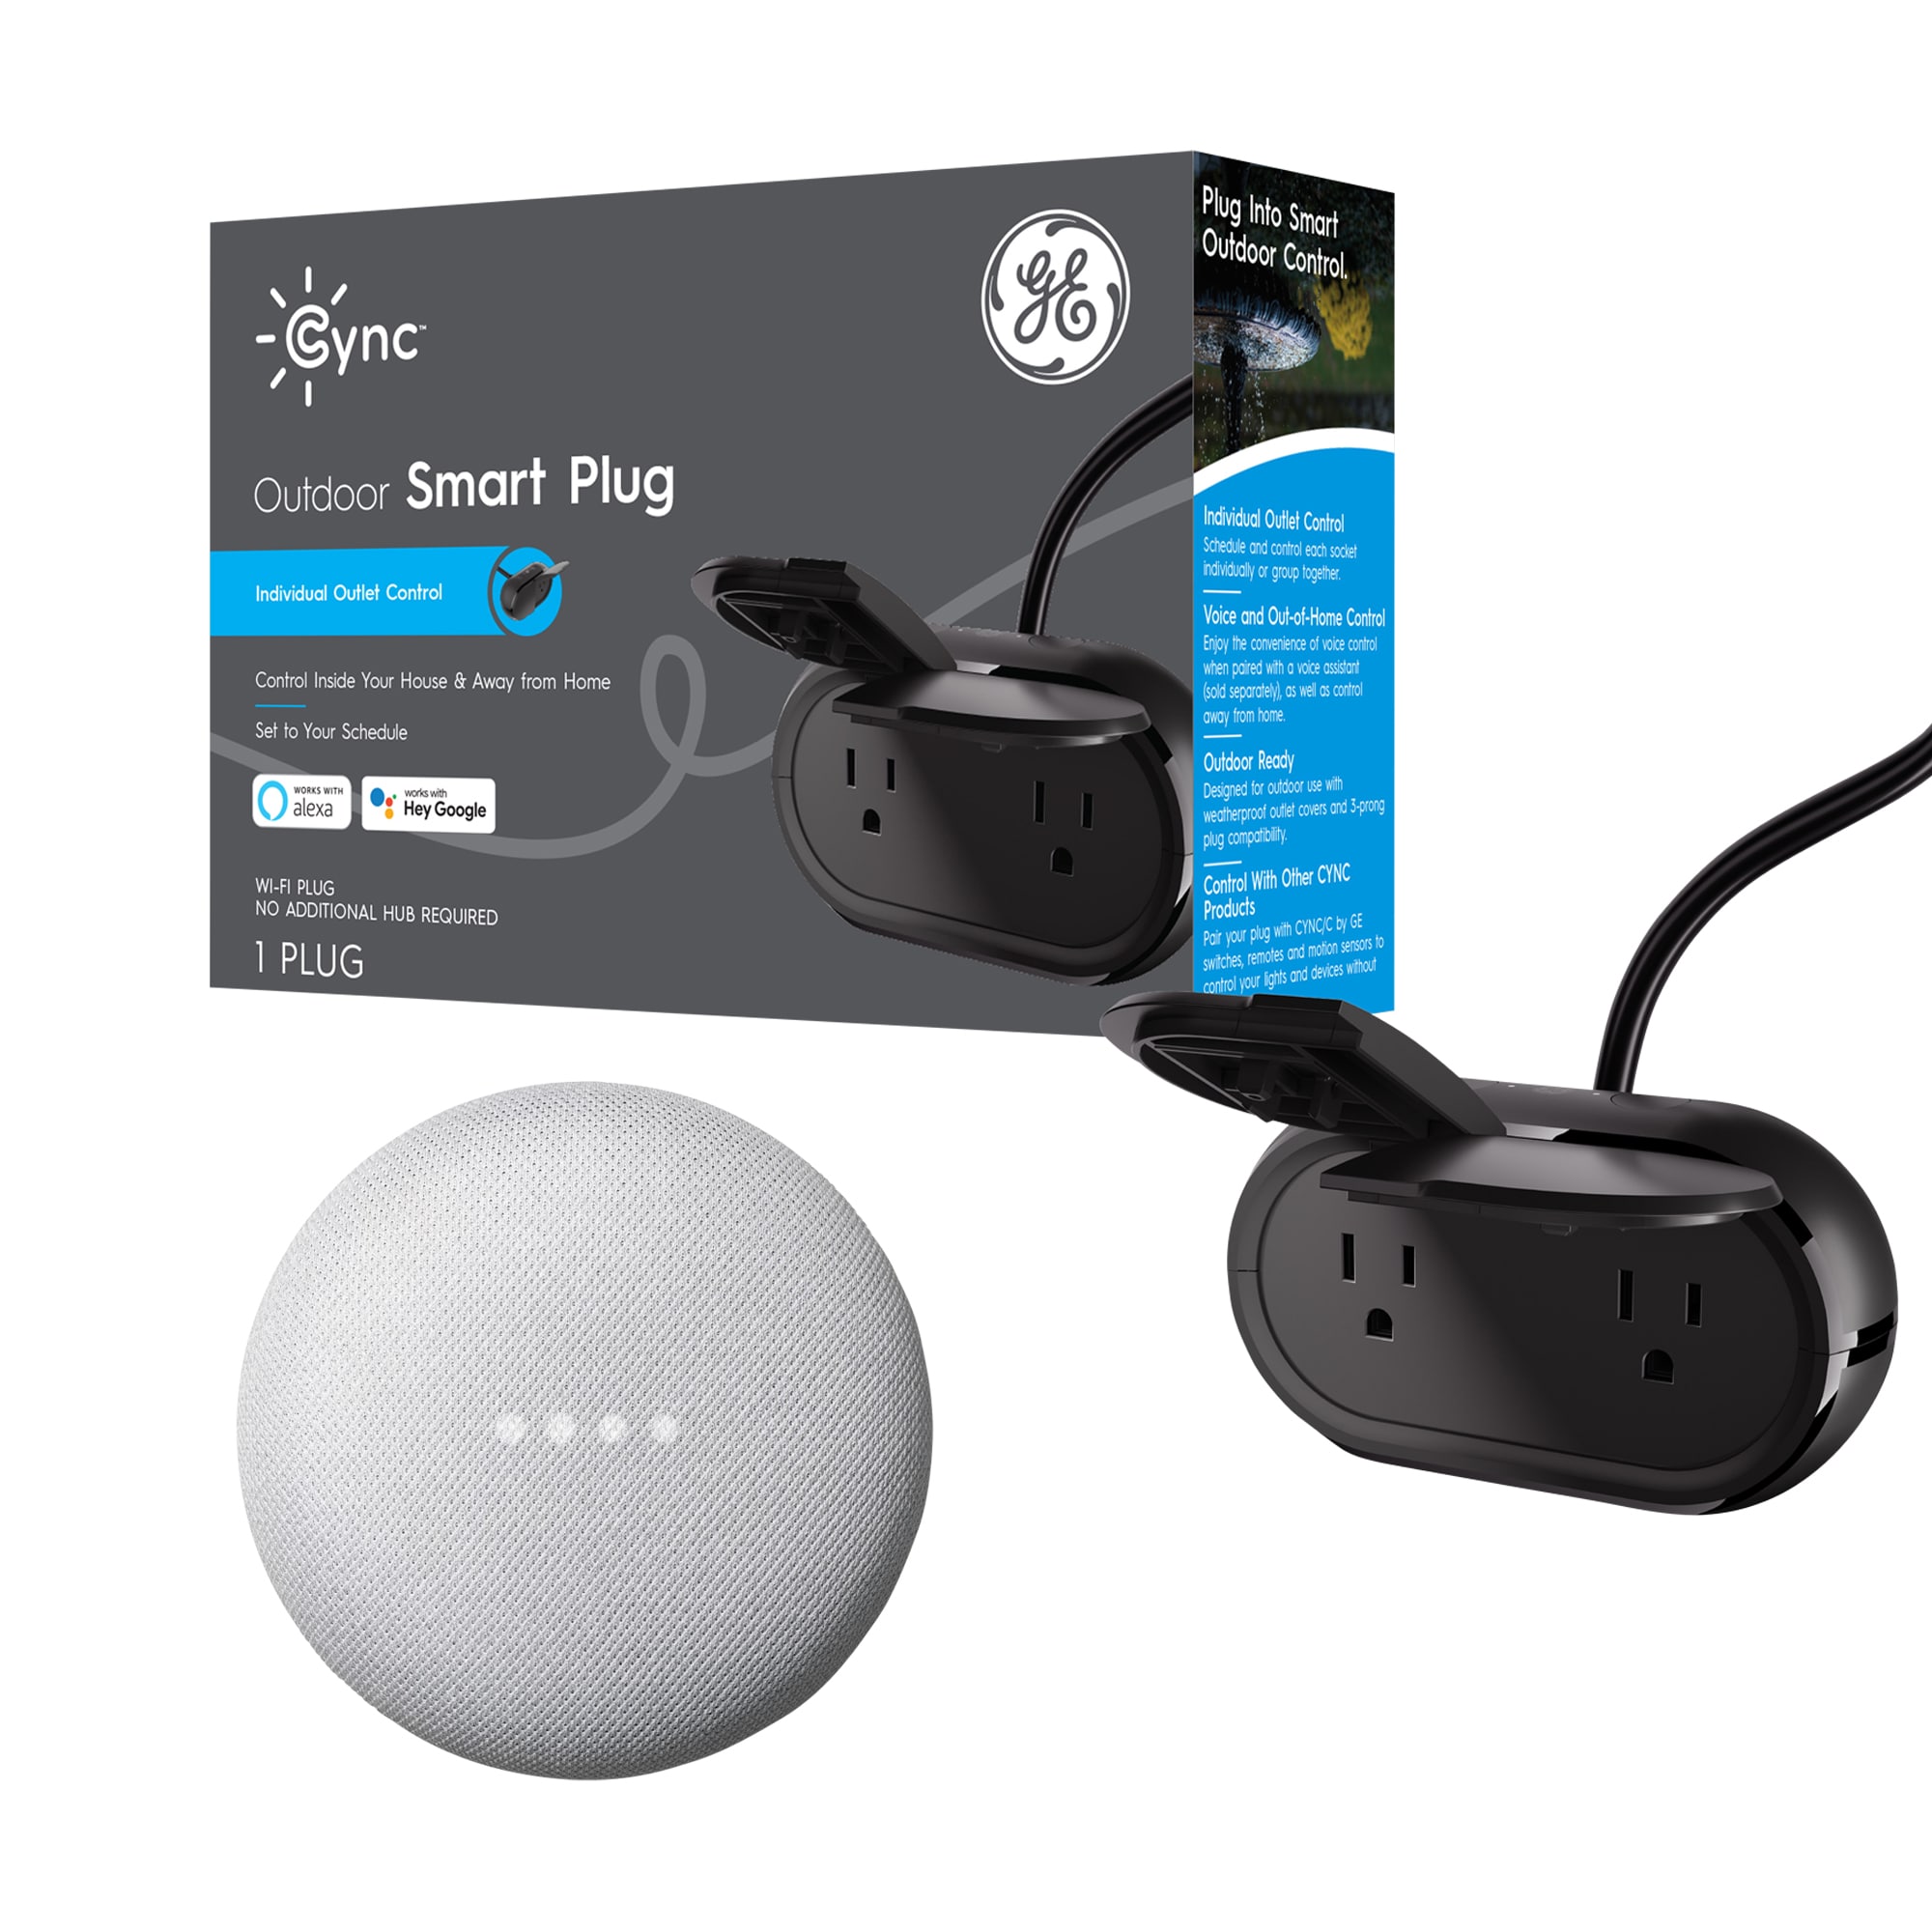 Google Nest Mini (2nd Gen) Smart Speaker with Google Assistant Voice Control in Chalk + GE Cync 120-Volt 2-Outlet Outdoor Smart Plug